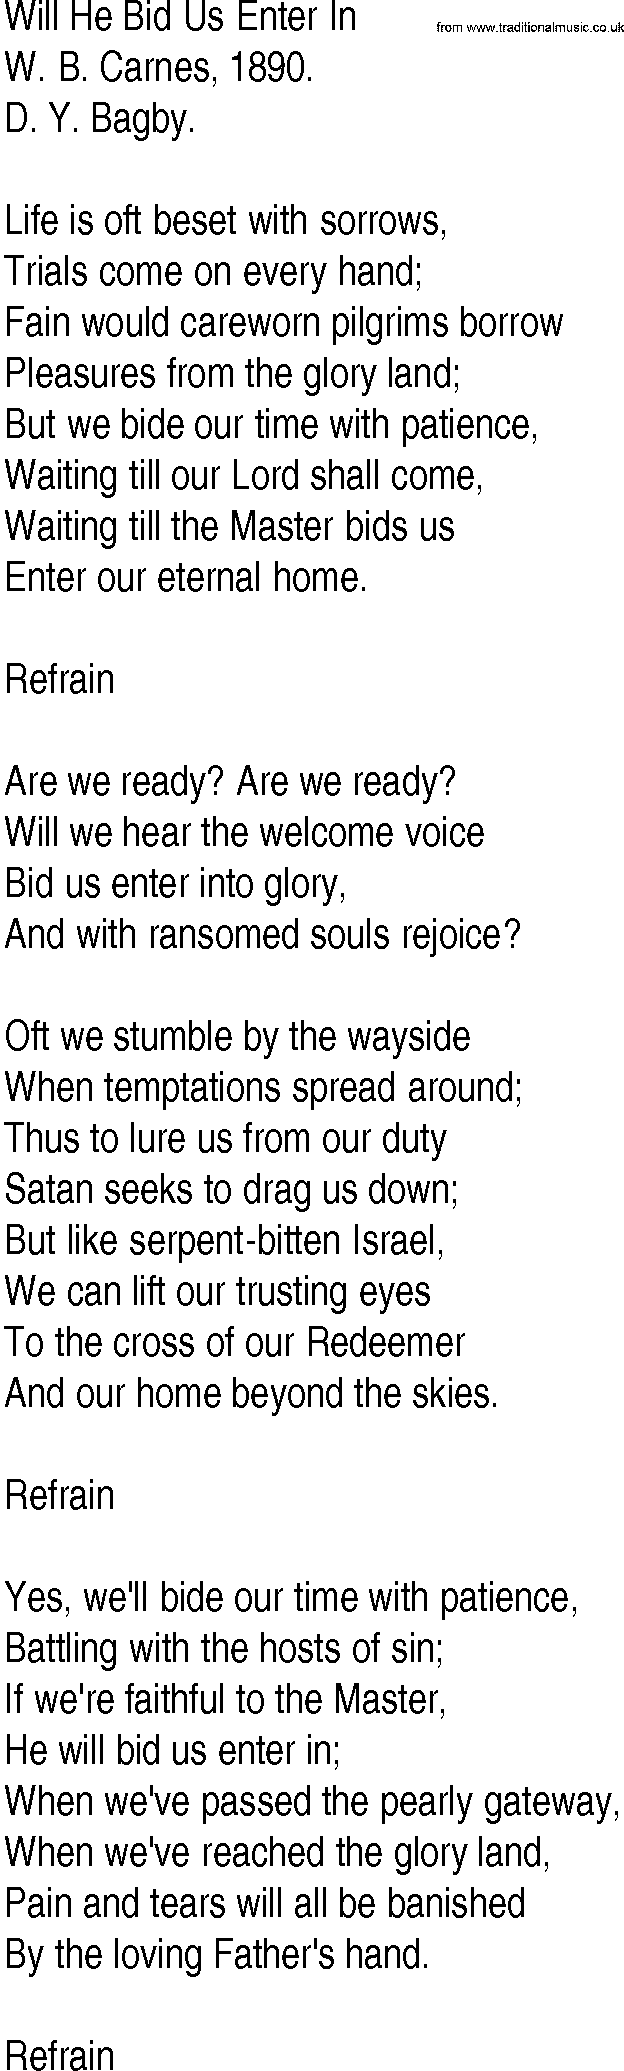 Hymn and Gospel Song: Will He Bid Us Enter In by W B Carnes lyrics